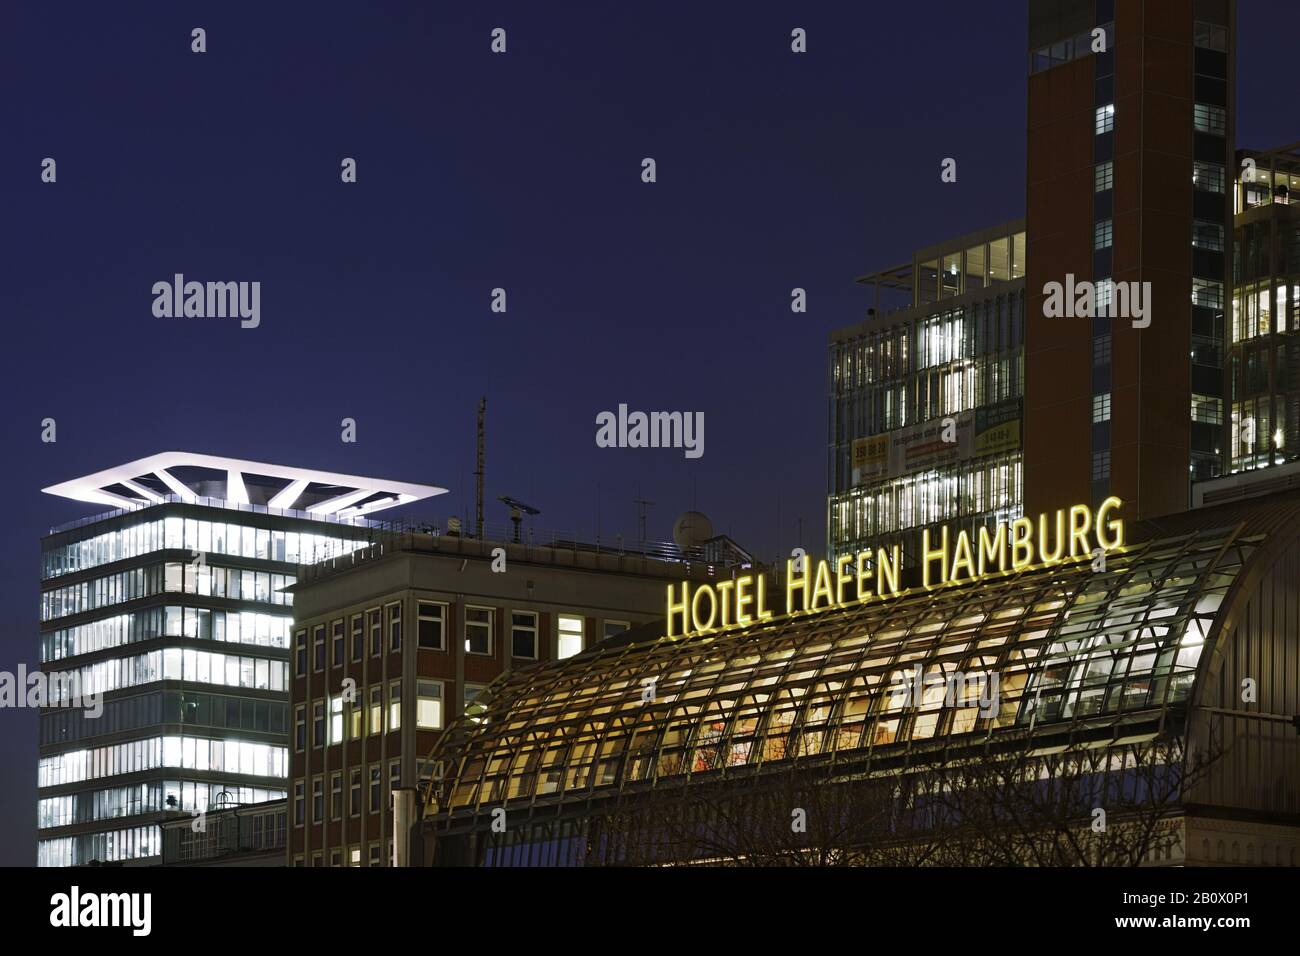 Hotel 'Hafen Hamburg' e zona birreria Astra, torre di uffici, Sankt Pauli, città anseatica di Amburgo, Germania, Foto Stock